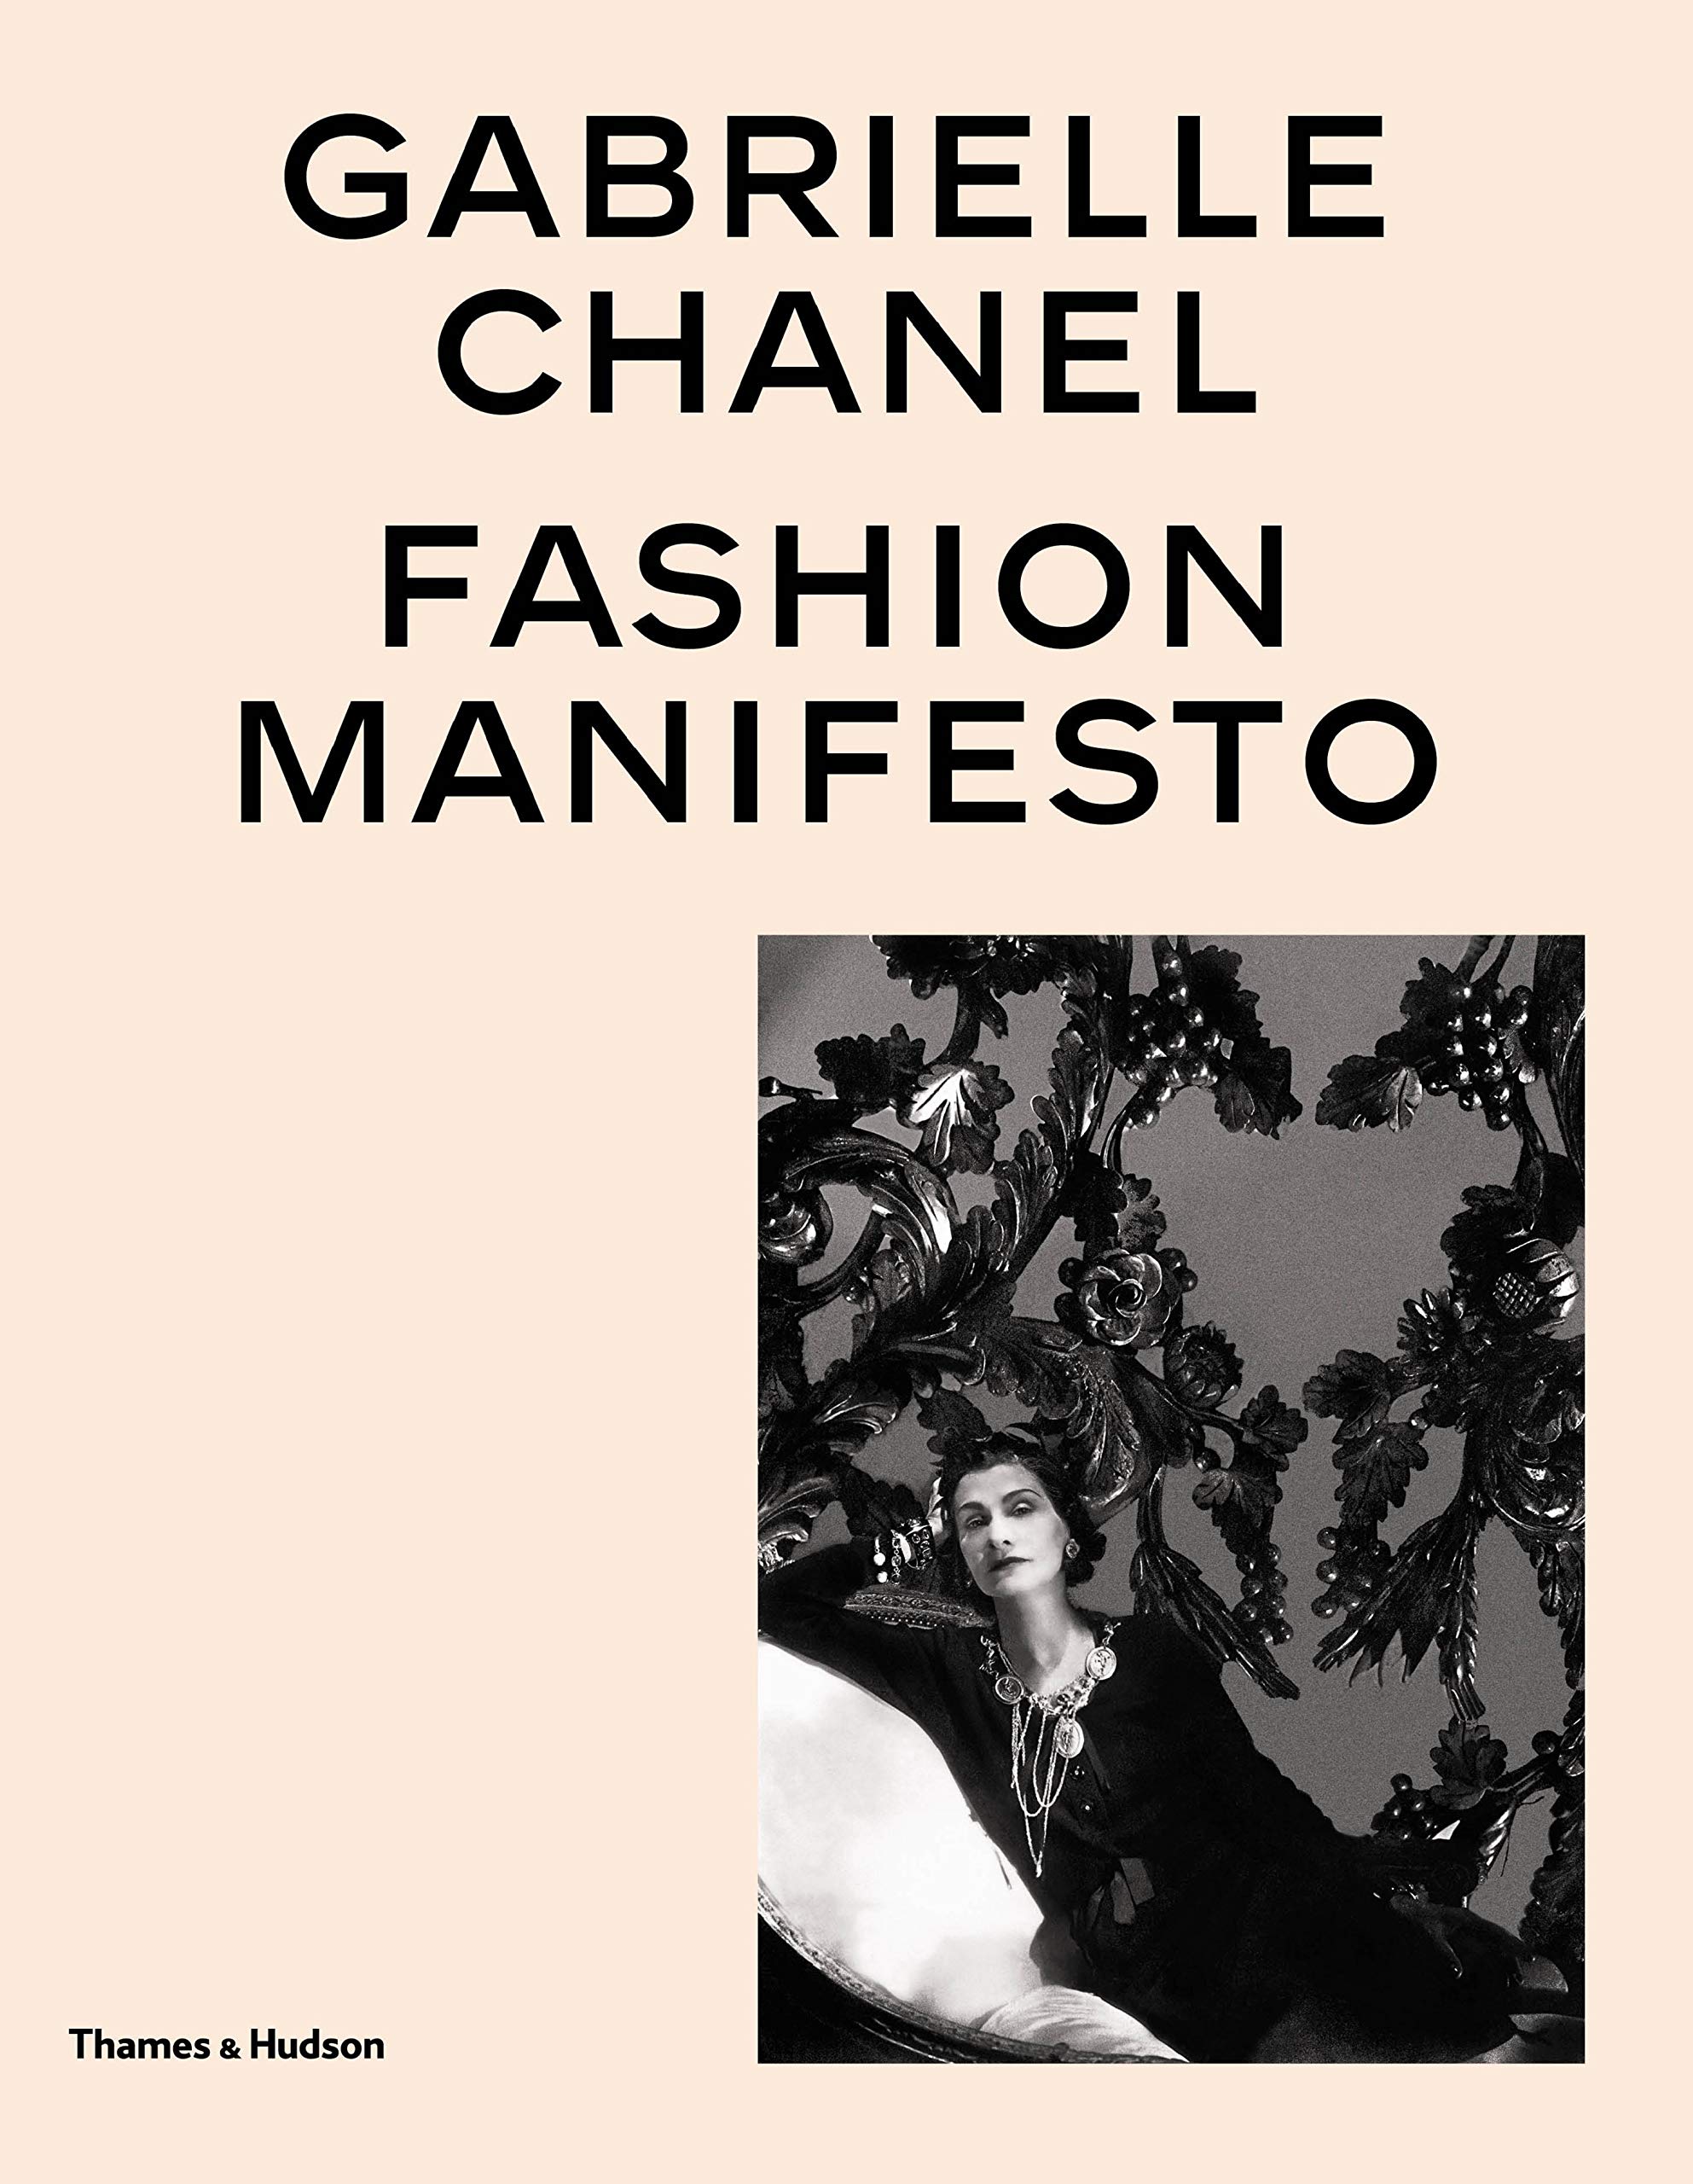 Gabrielle Chanel. Fashion Manifesto Exhibition in London